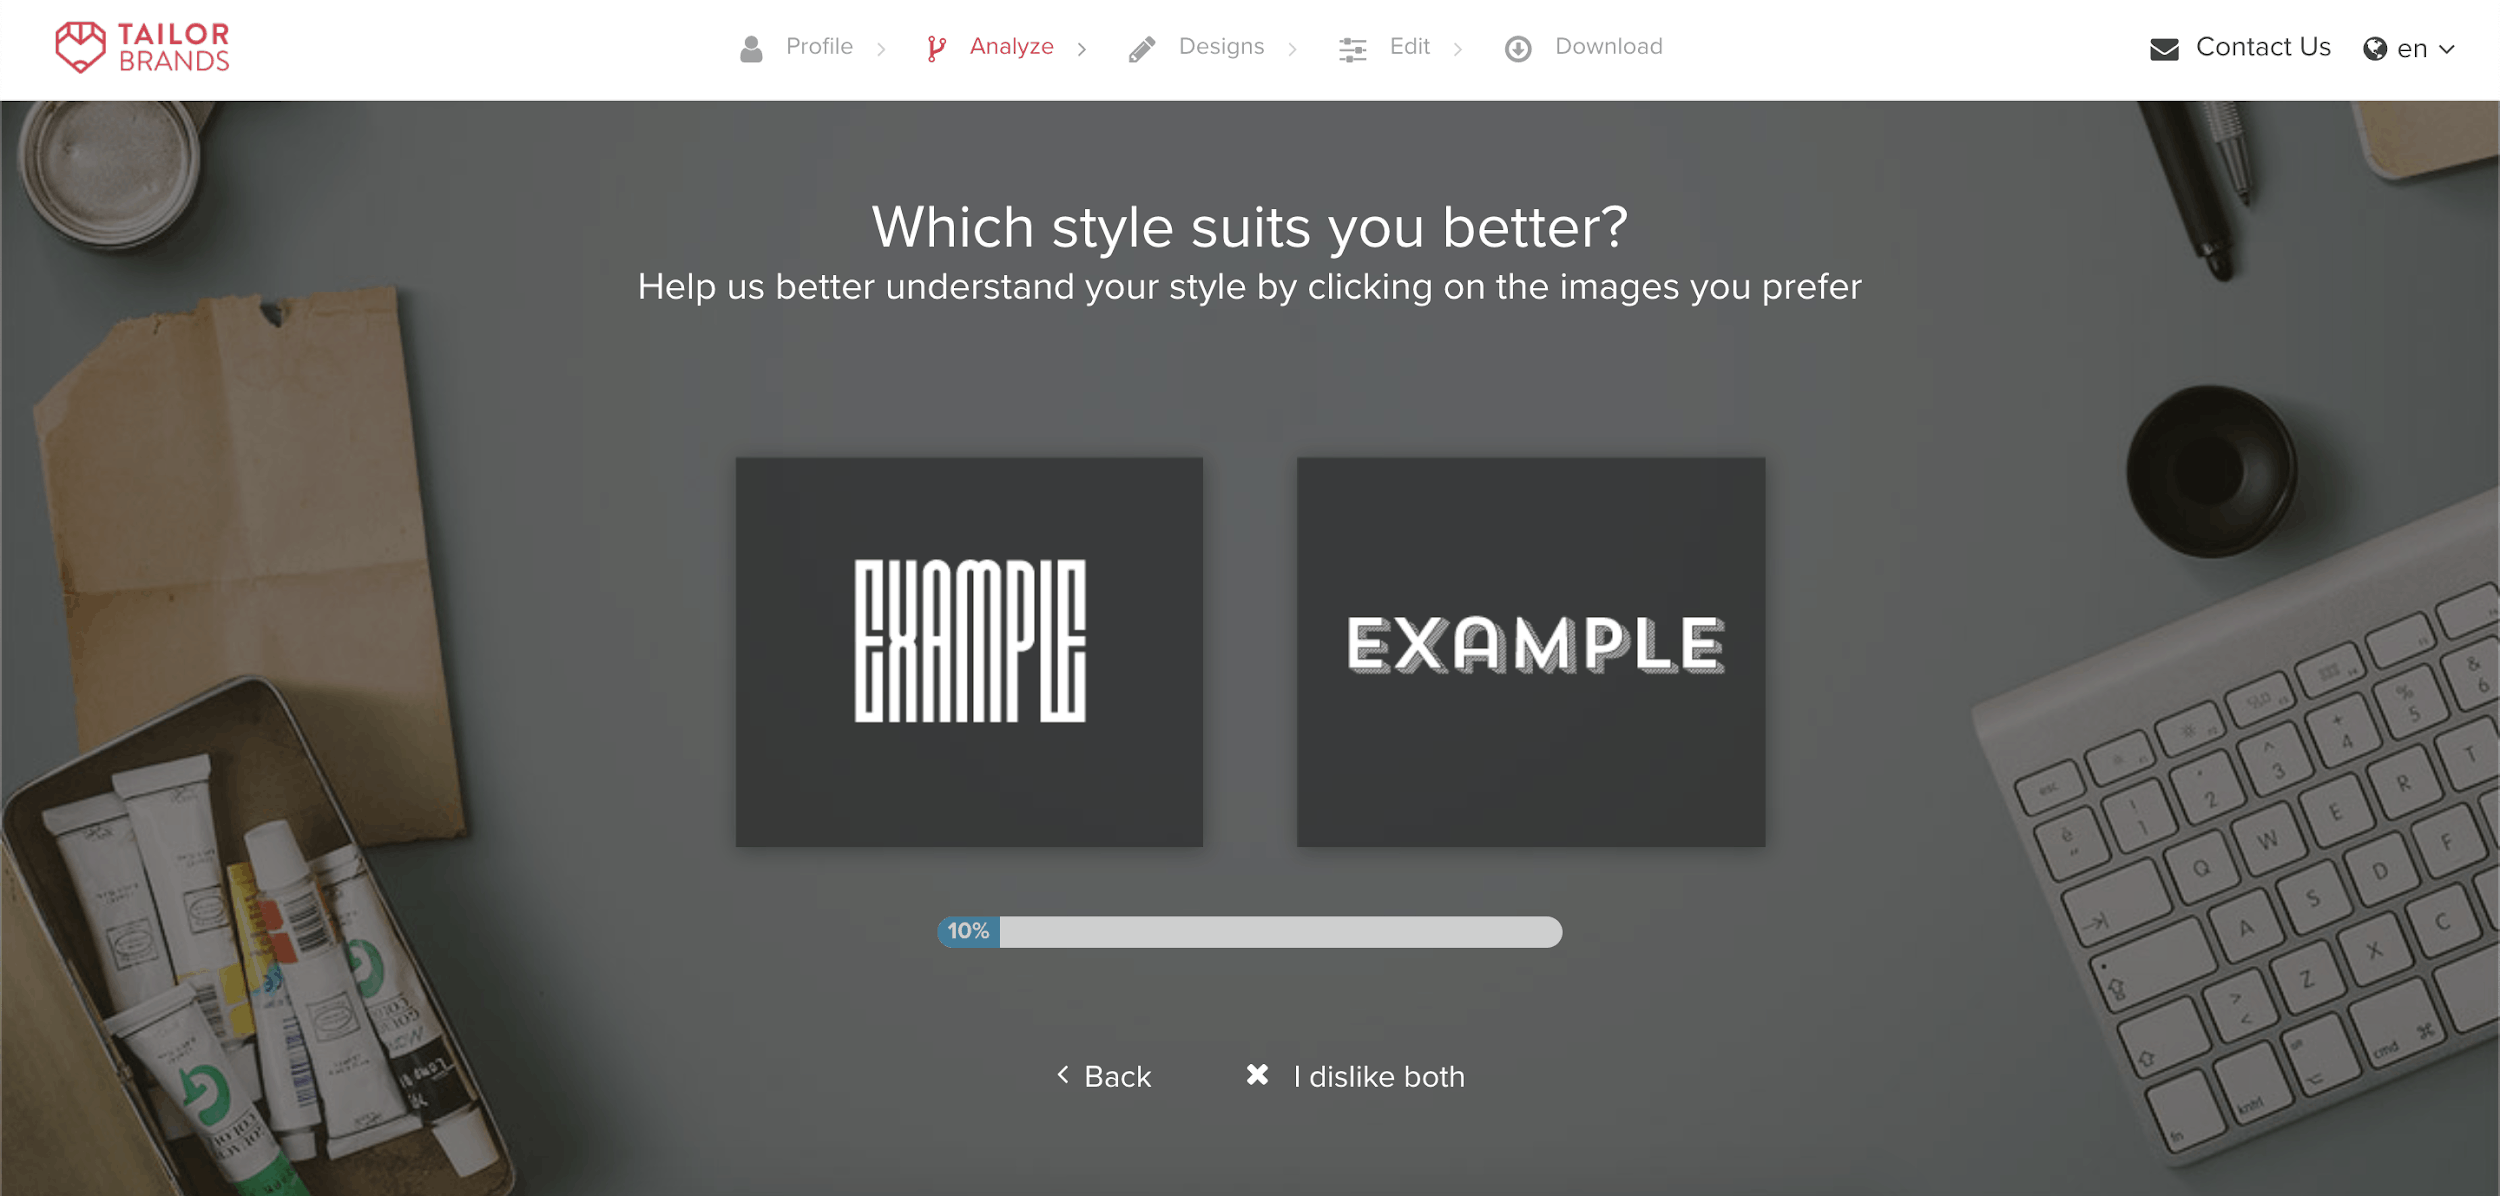 Tailor Brands screenshot - Choose font style